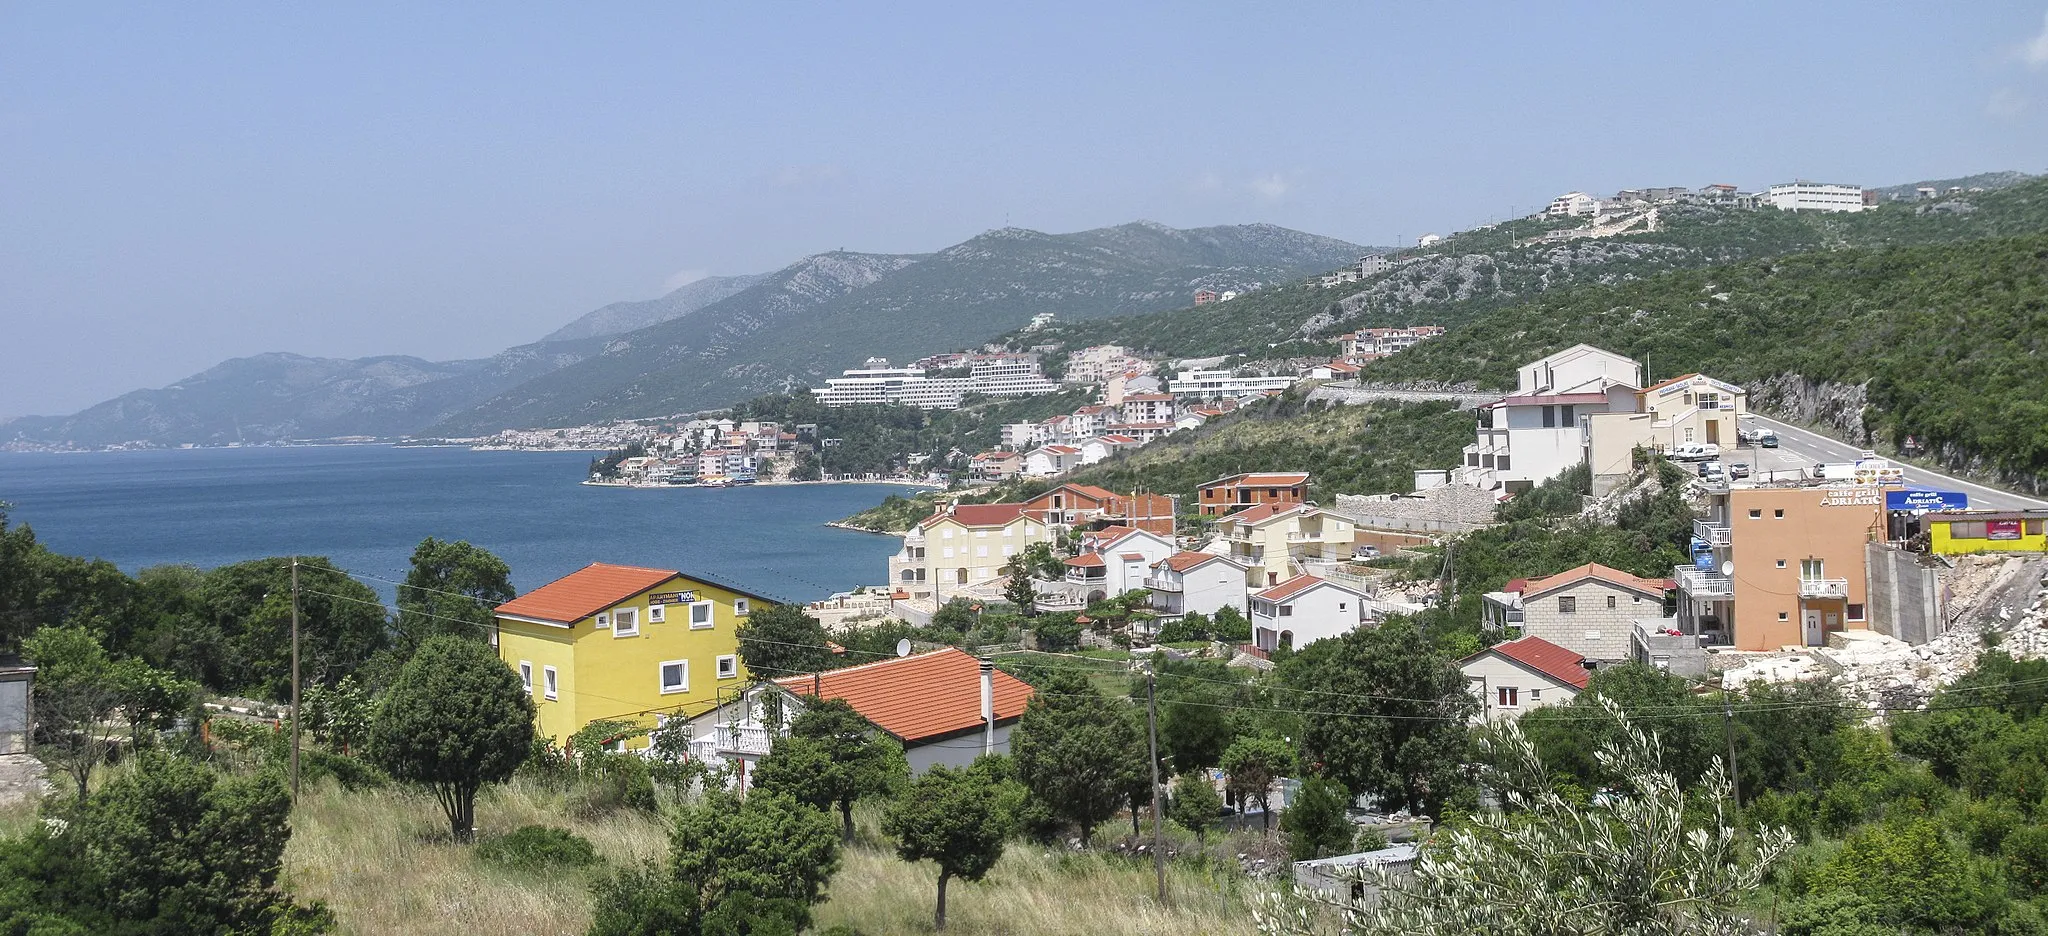 Photo showing: Neum, Adriatic Sea, Bosnia and Herzegovina
Photo taken from Orka Hotel